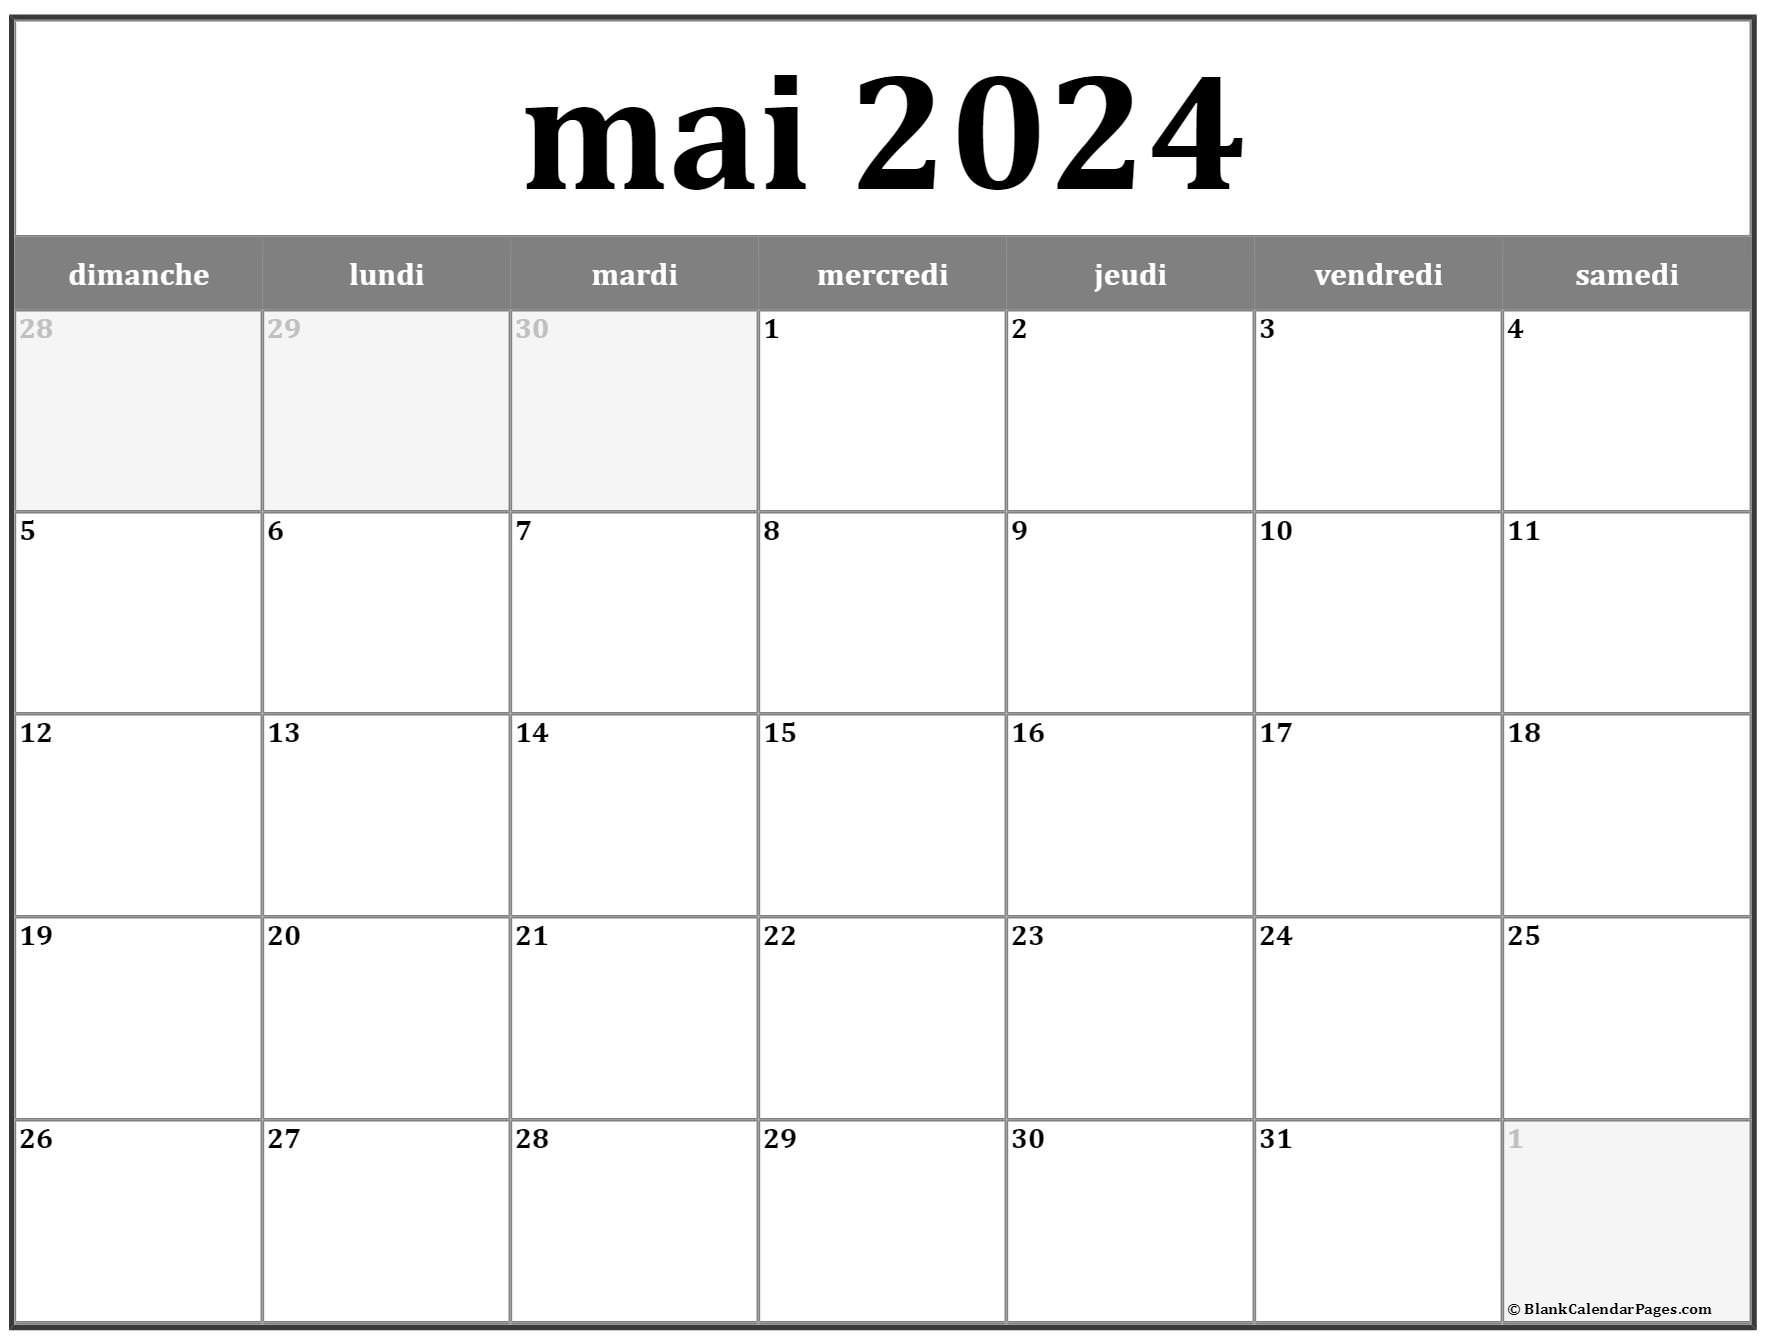  mai  2022  calendrier imprimable Calendrier gratuit